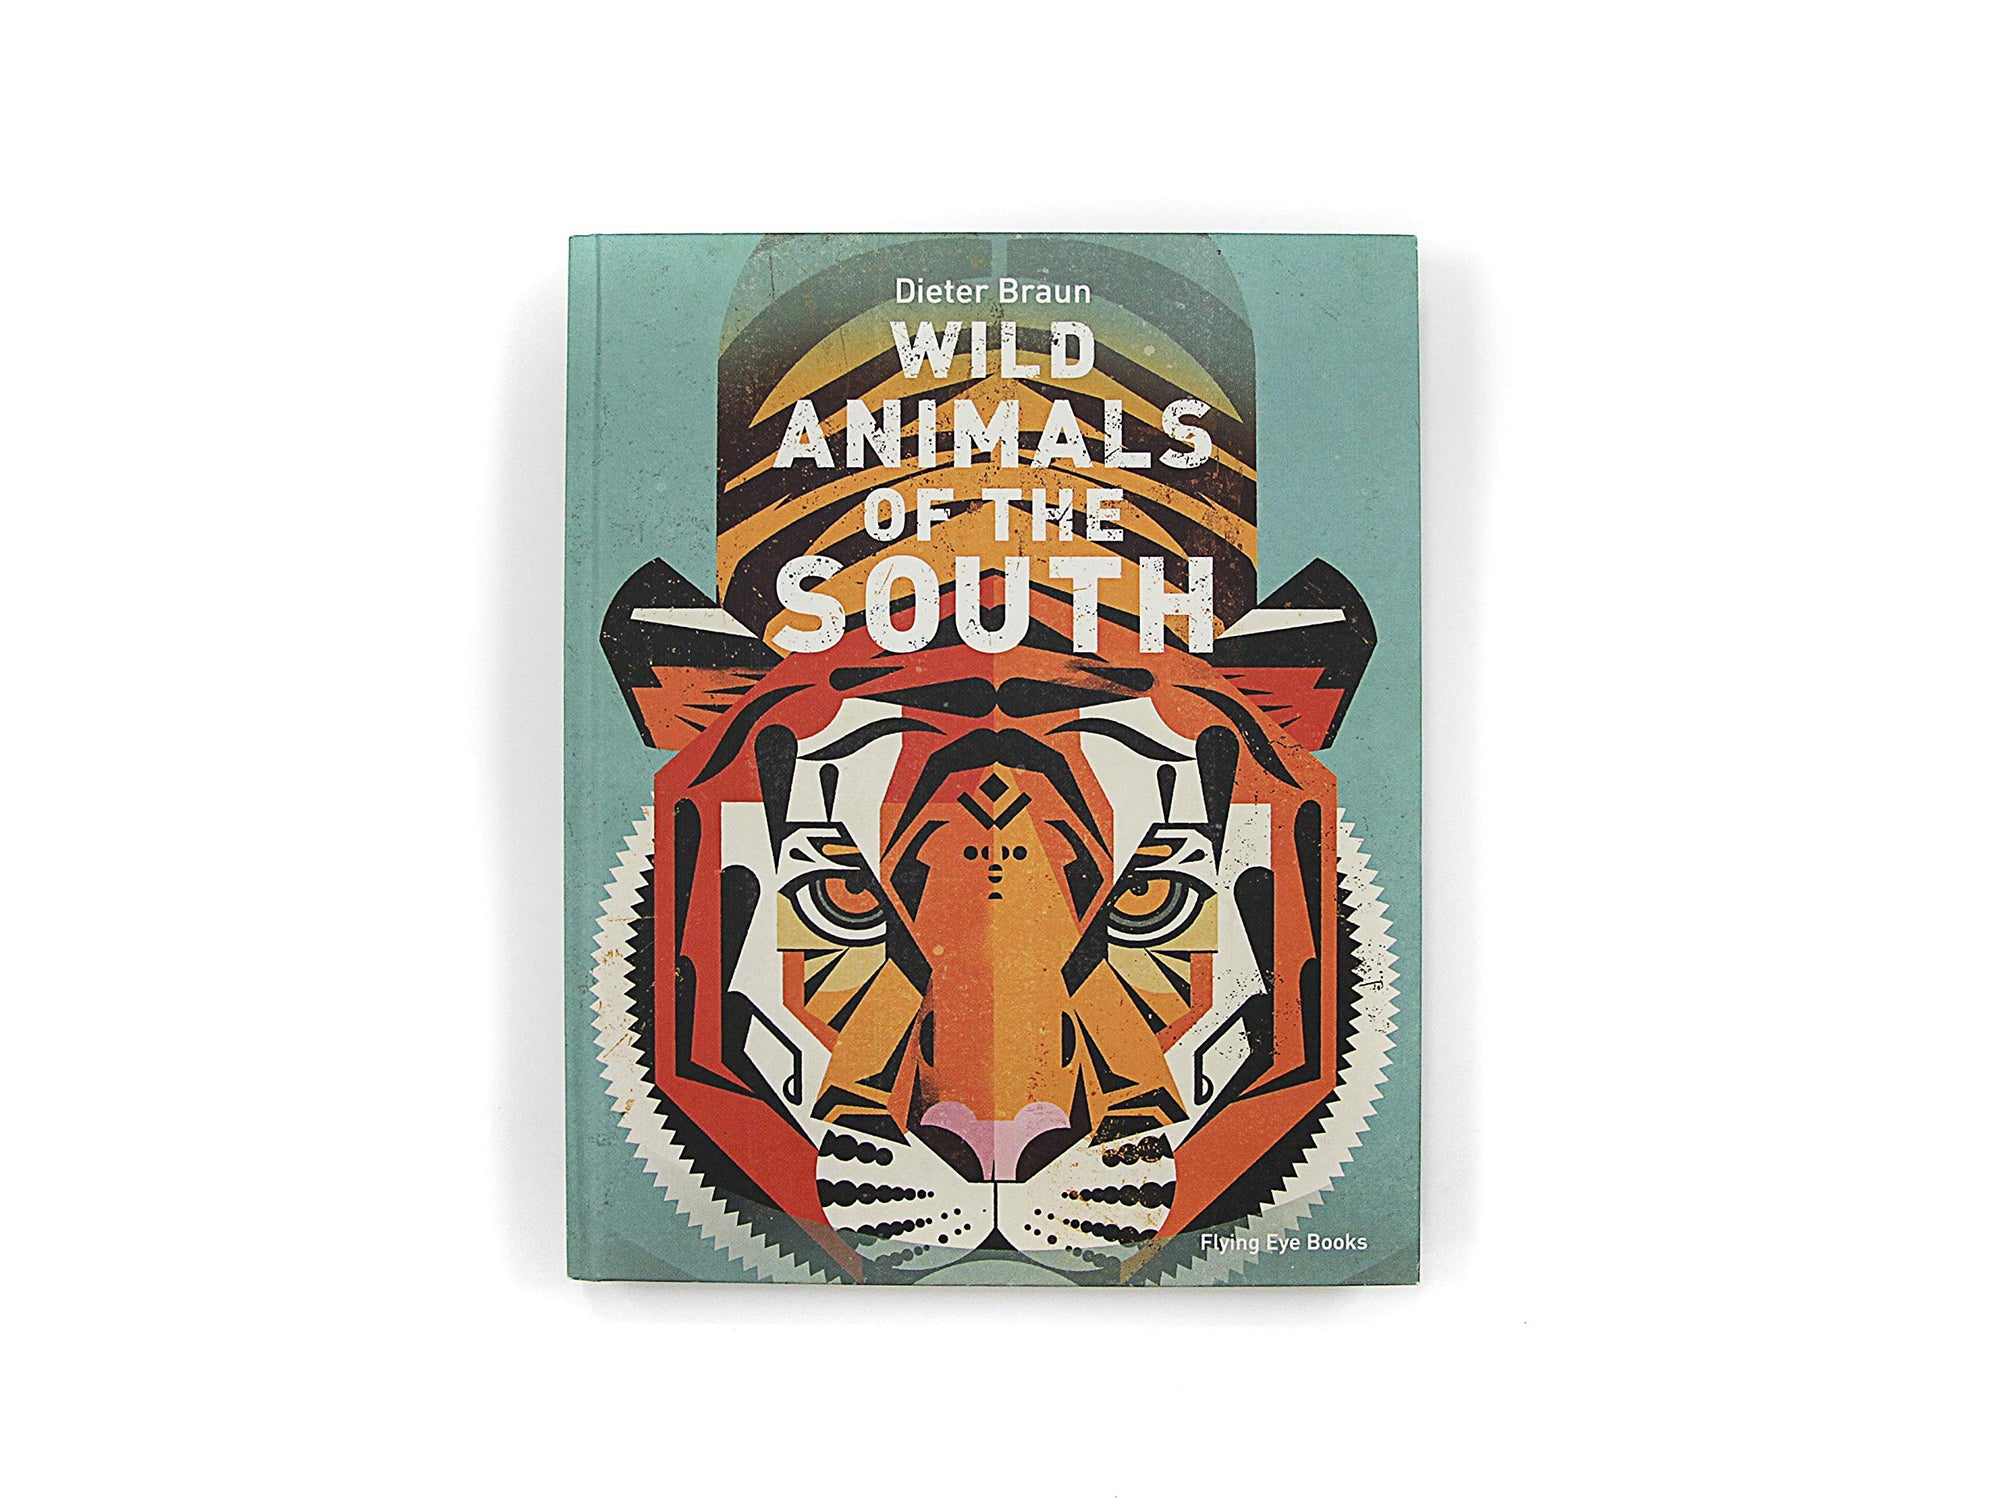 Wild Animals of The South  by Dieter Braun